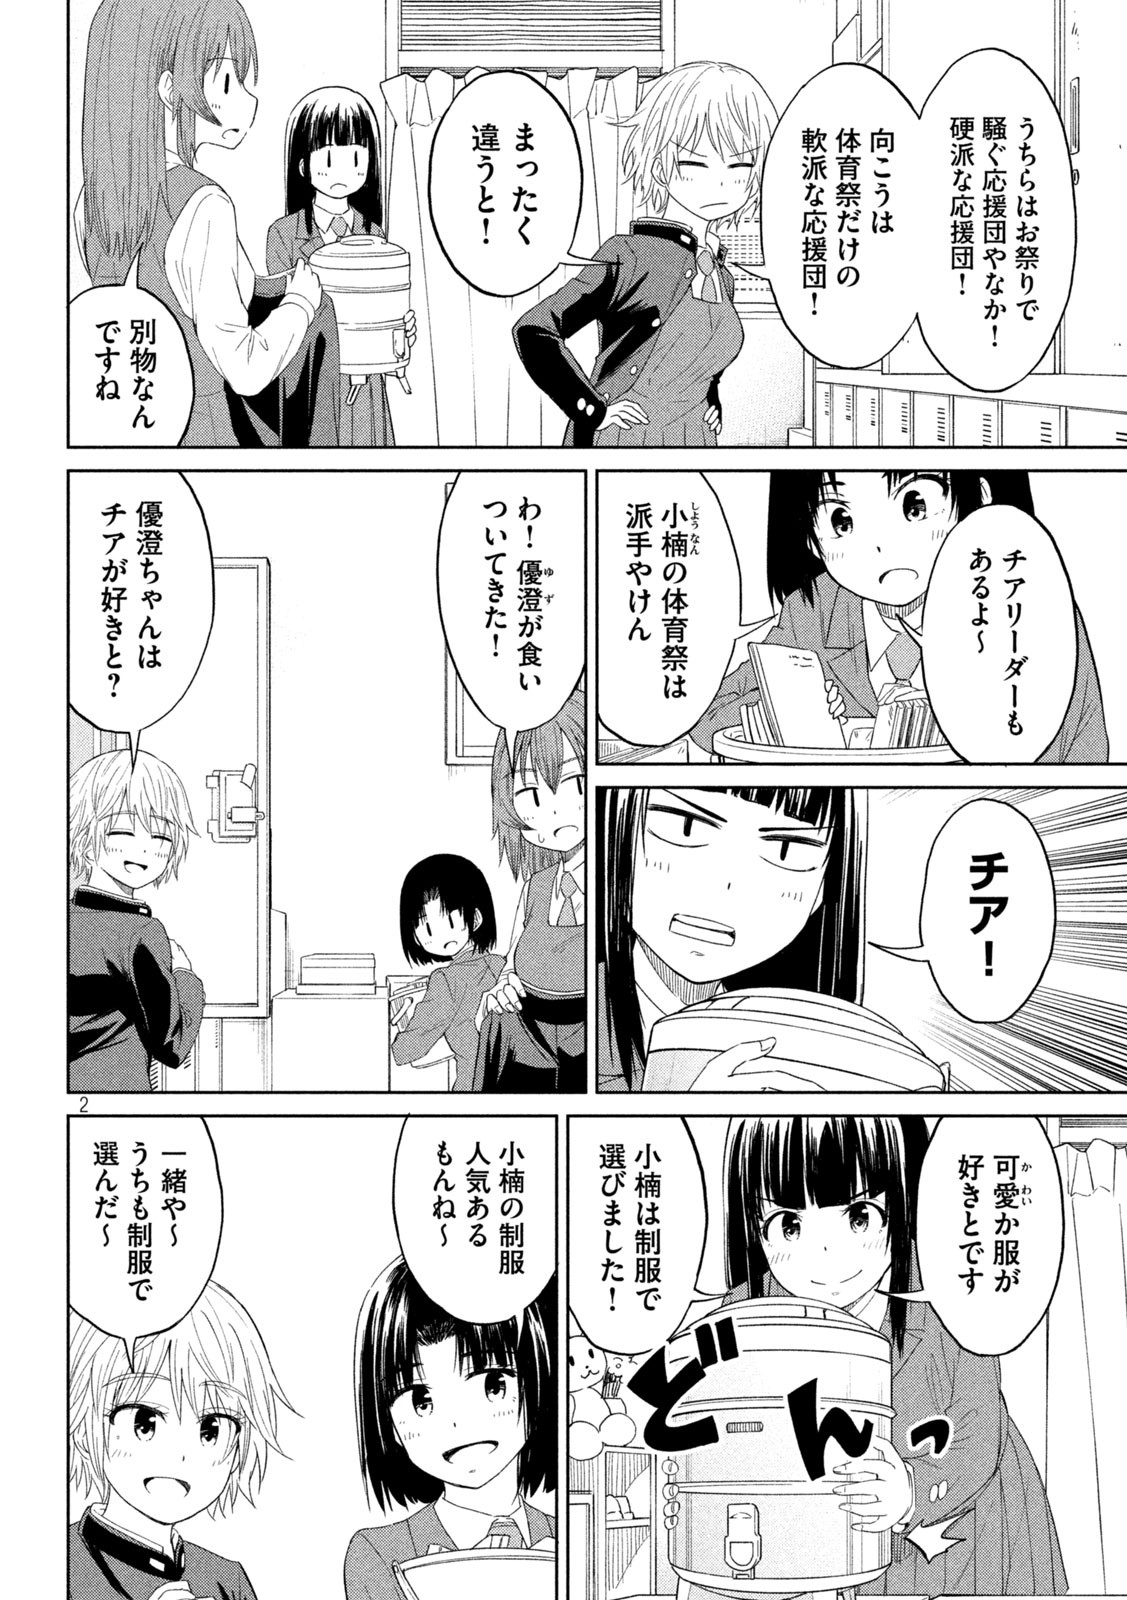 Koharu haru! - Chapter 98 - Page 2